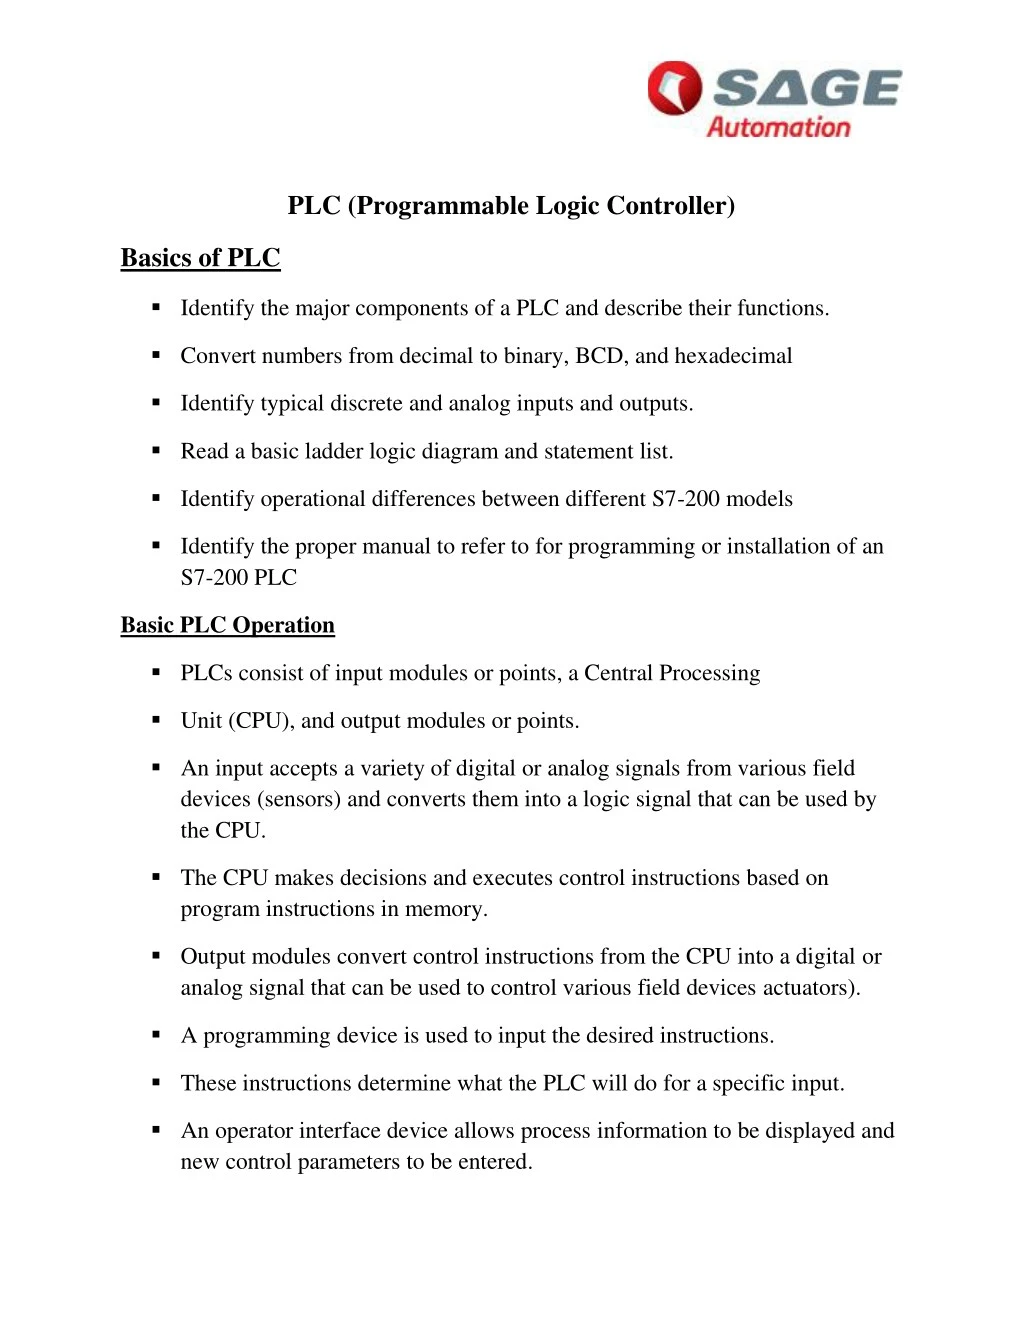 plc programmable logic controller